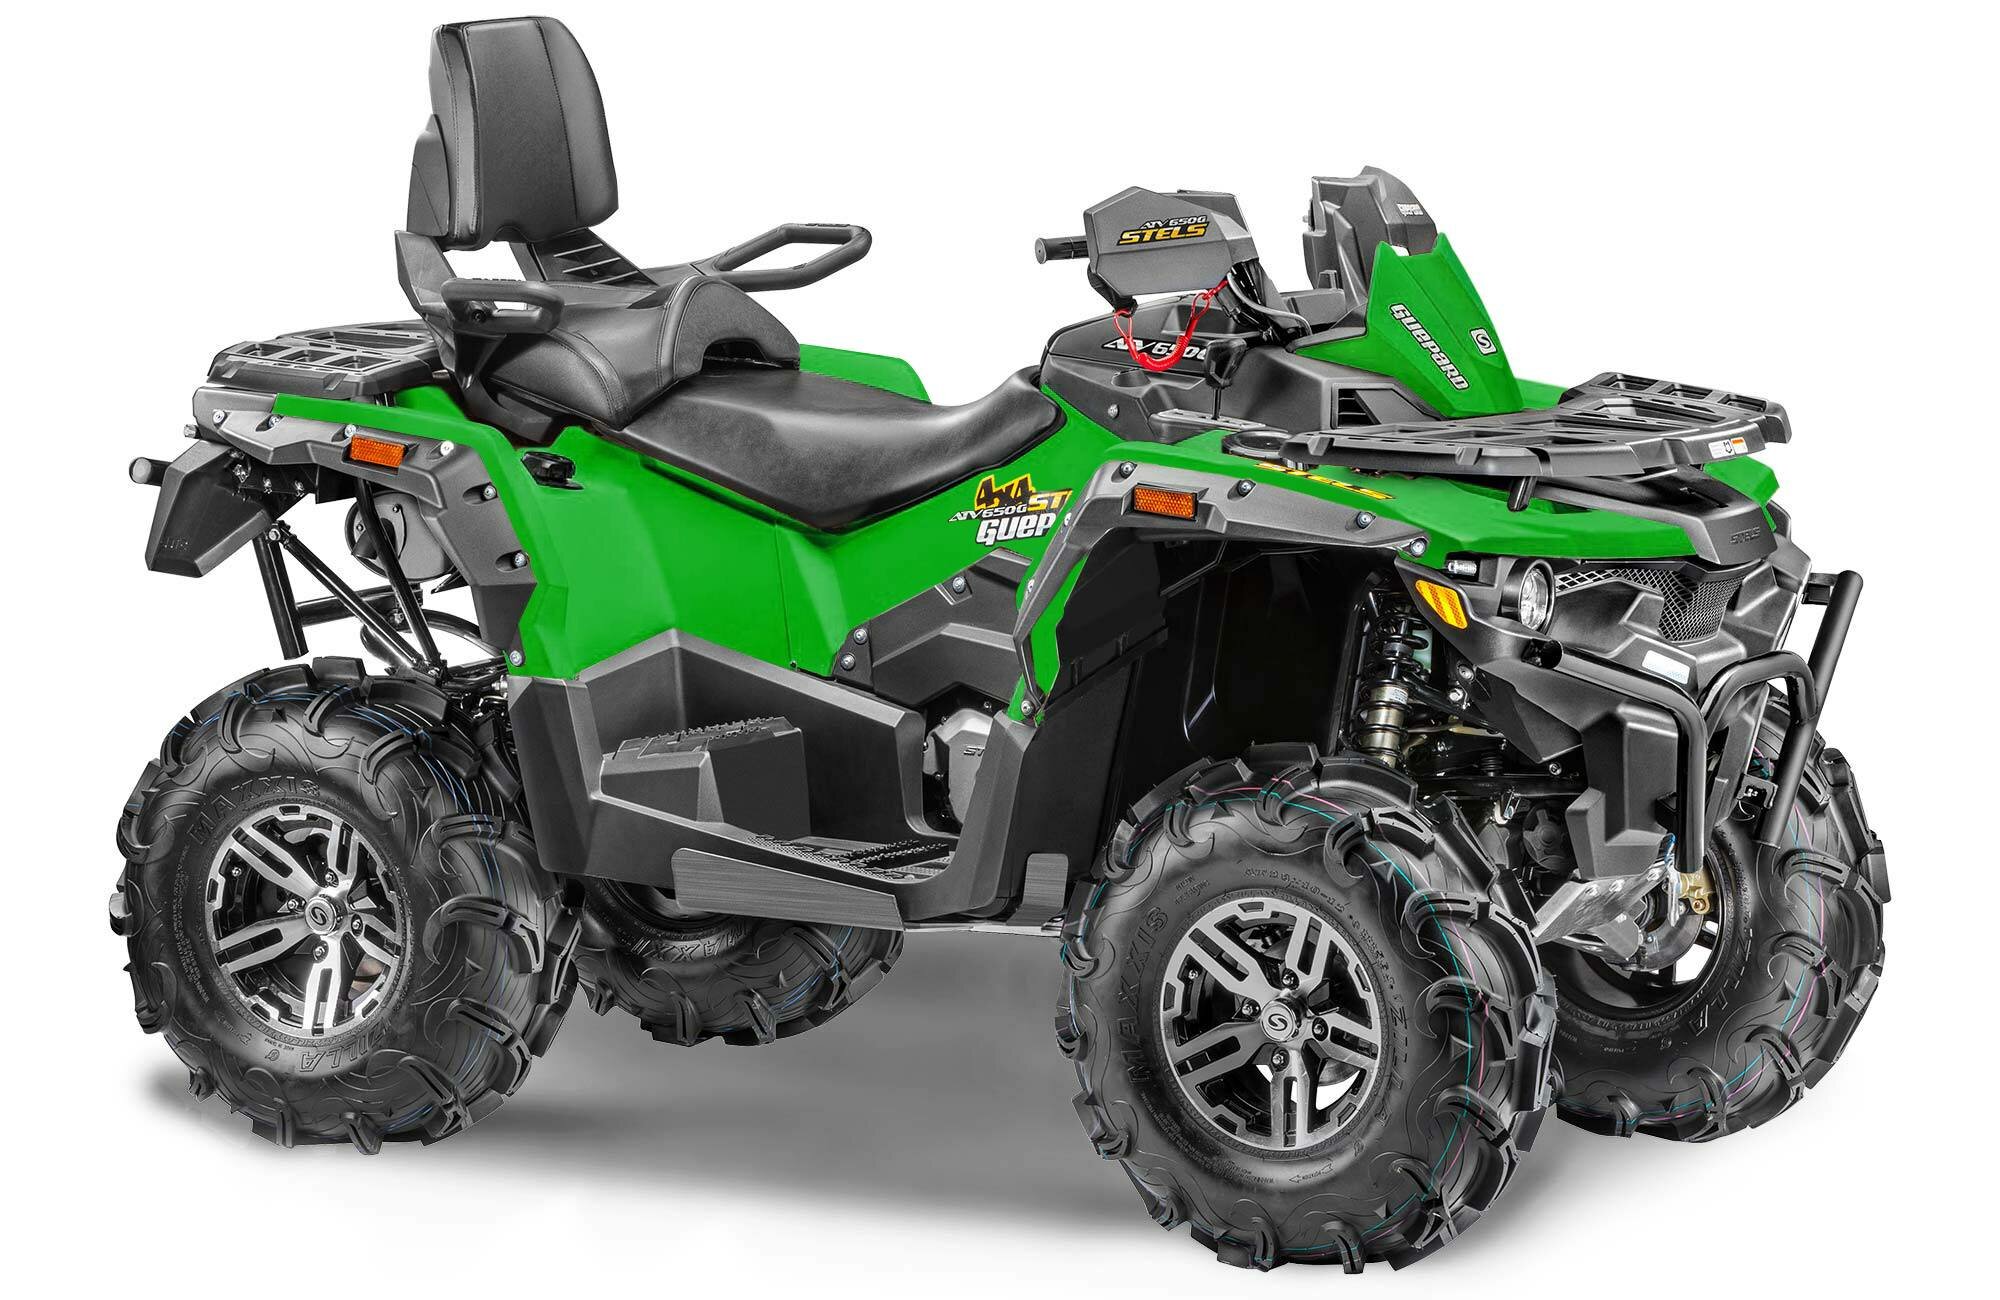 Квадроцикл Stels ATV 650 Guepard Trophy Зеленый - Раздел: Автотовары, мототовары